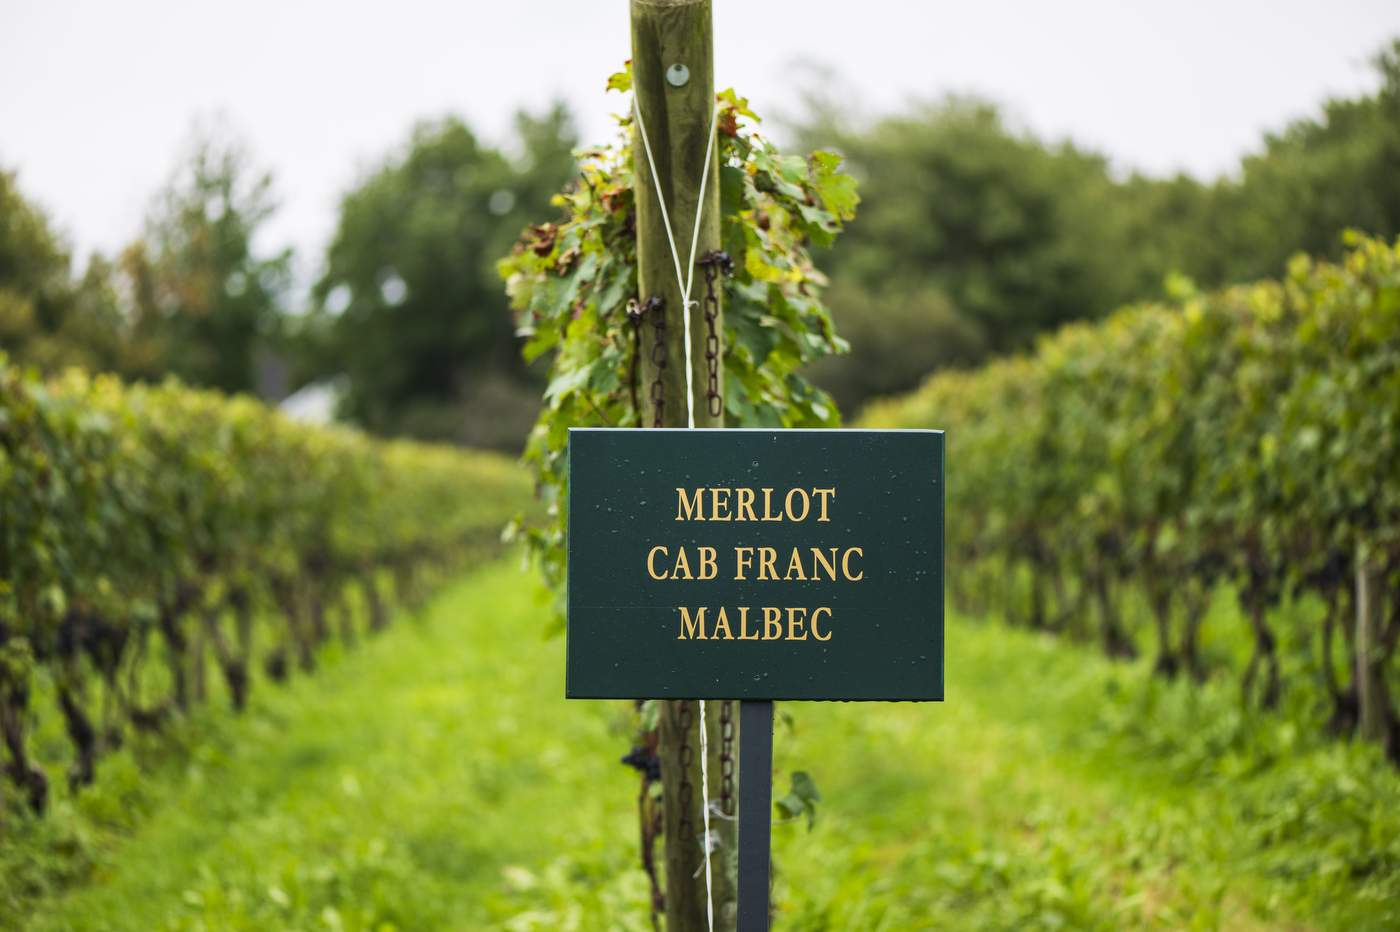 Vineyard sign that reads "MERLOT CAB FRANC MALBEC".